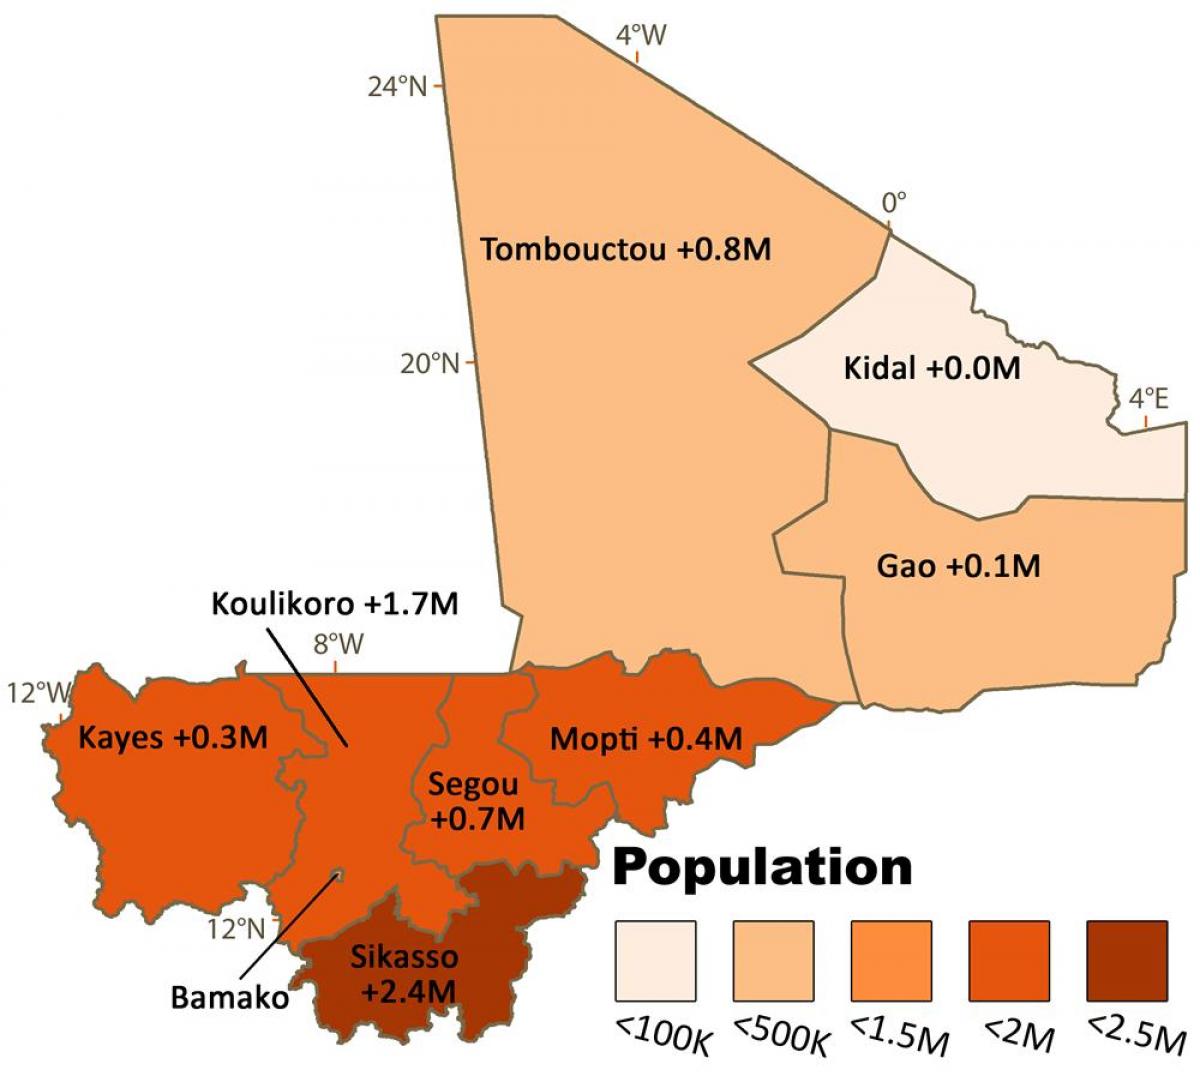 Kort over Mali befolkning